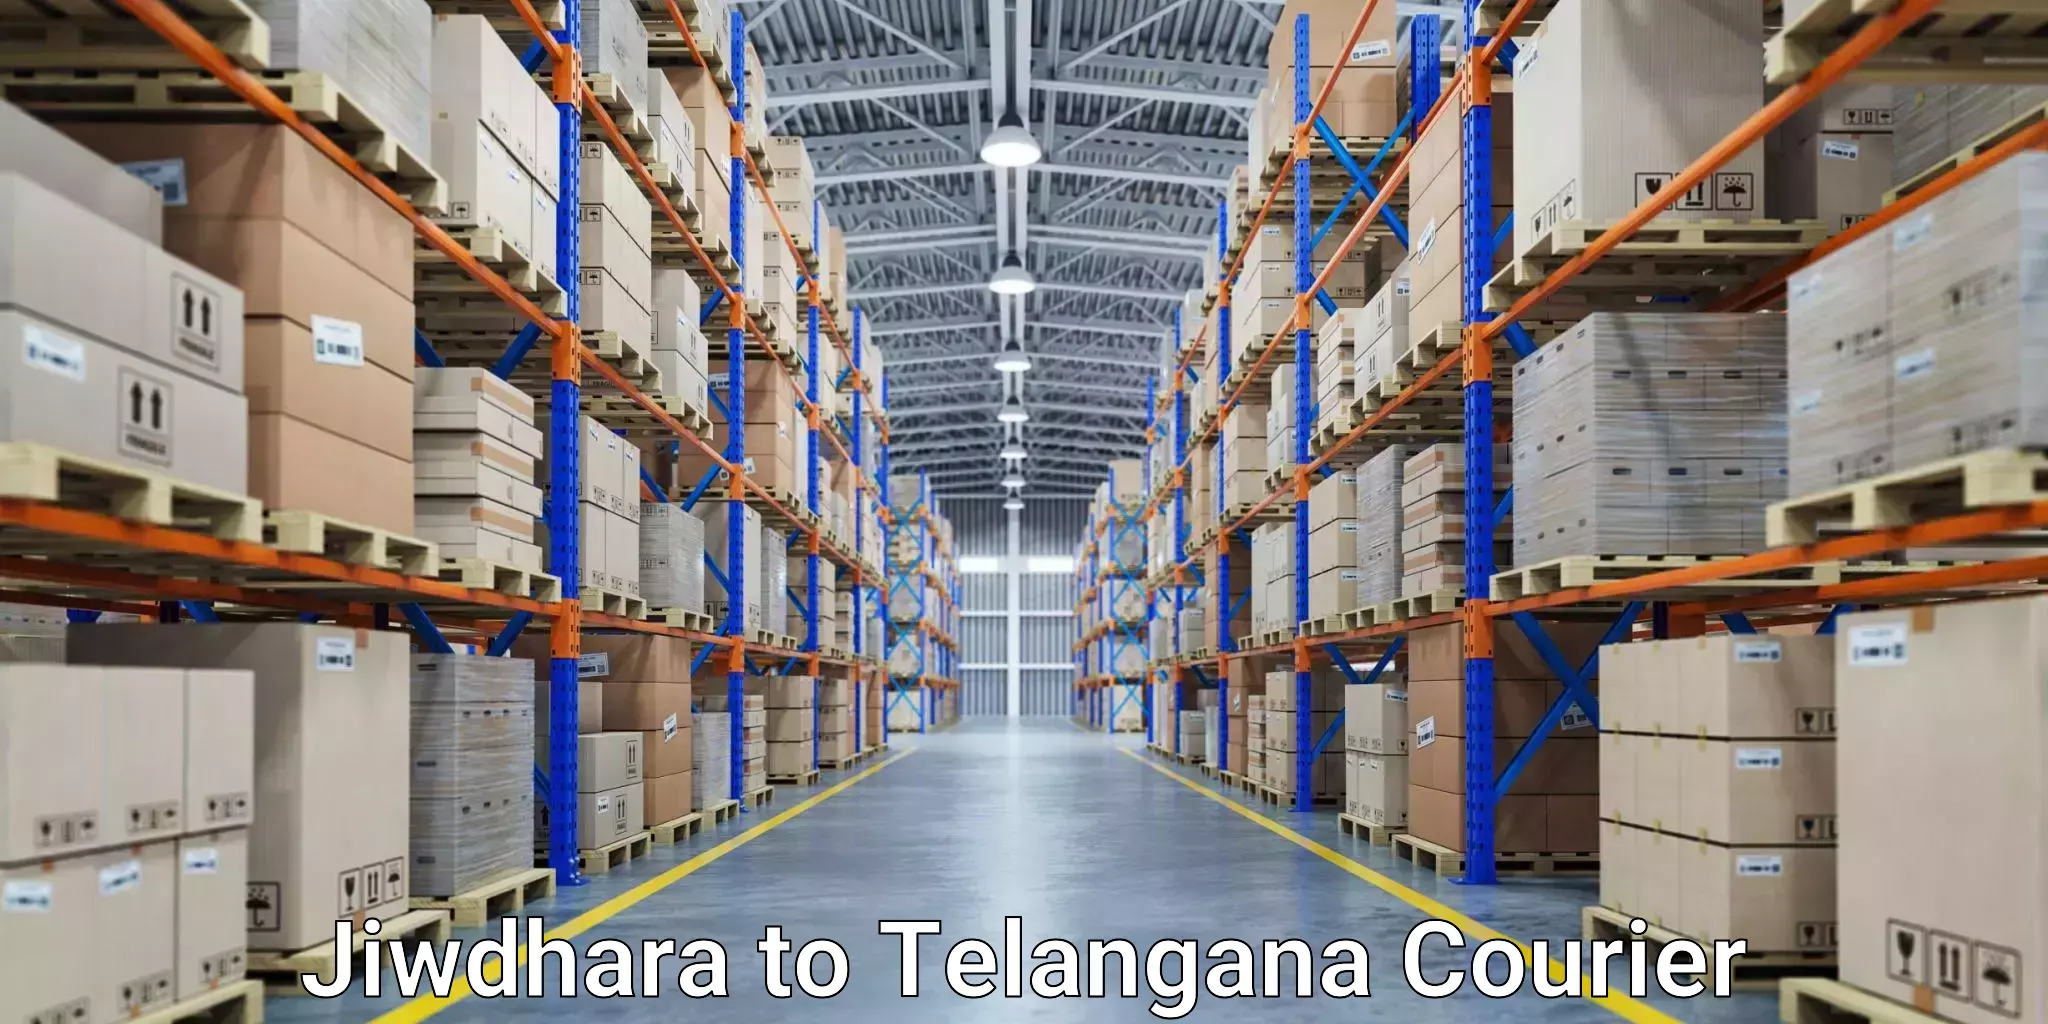 Specialized shipment handling in Jiwdhara to Telangana